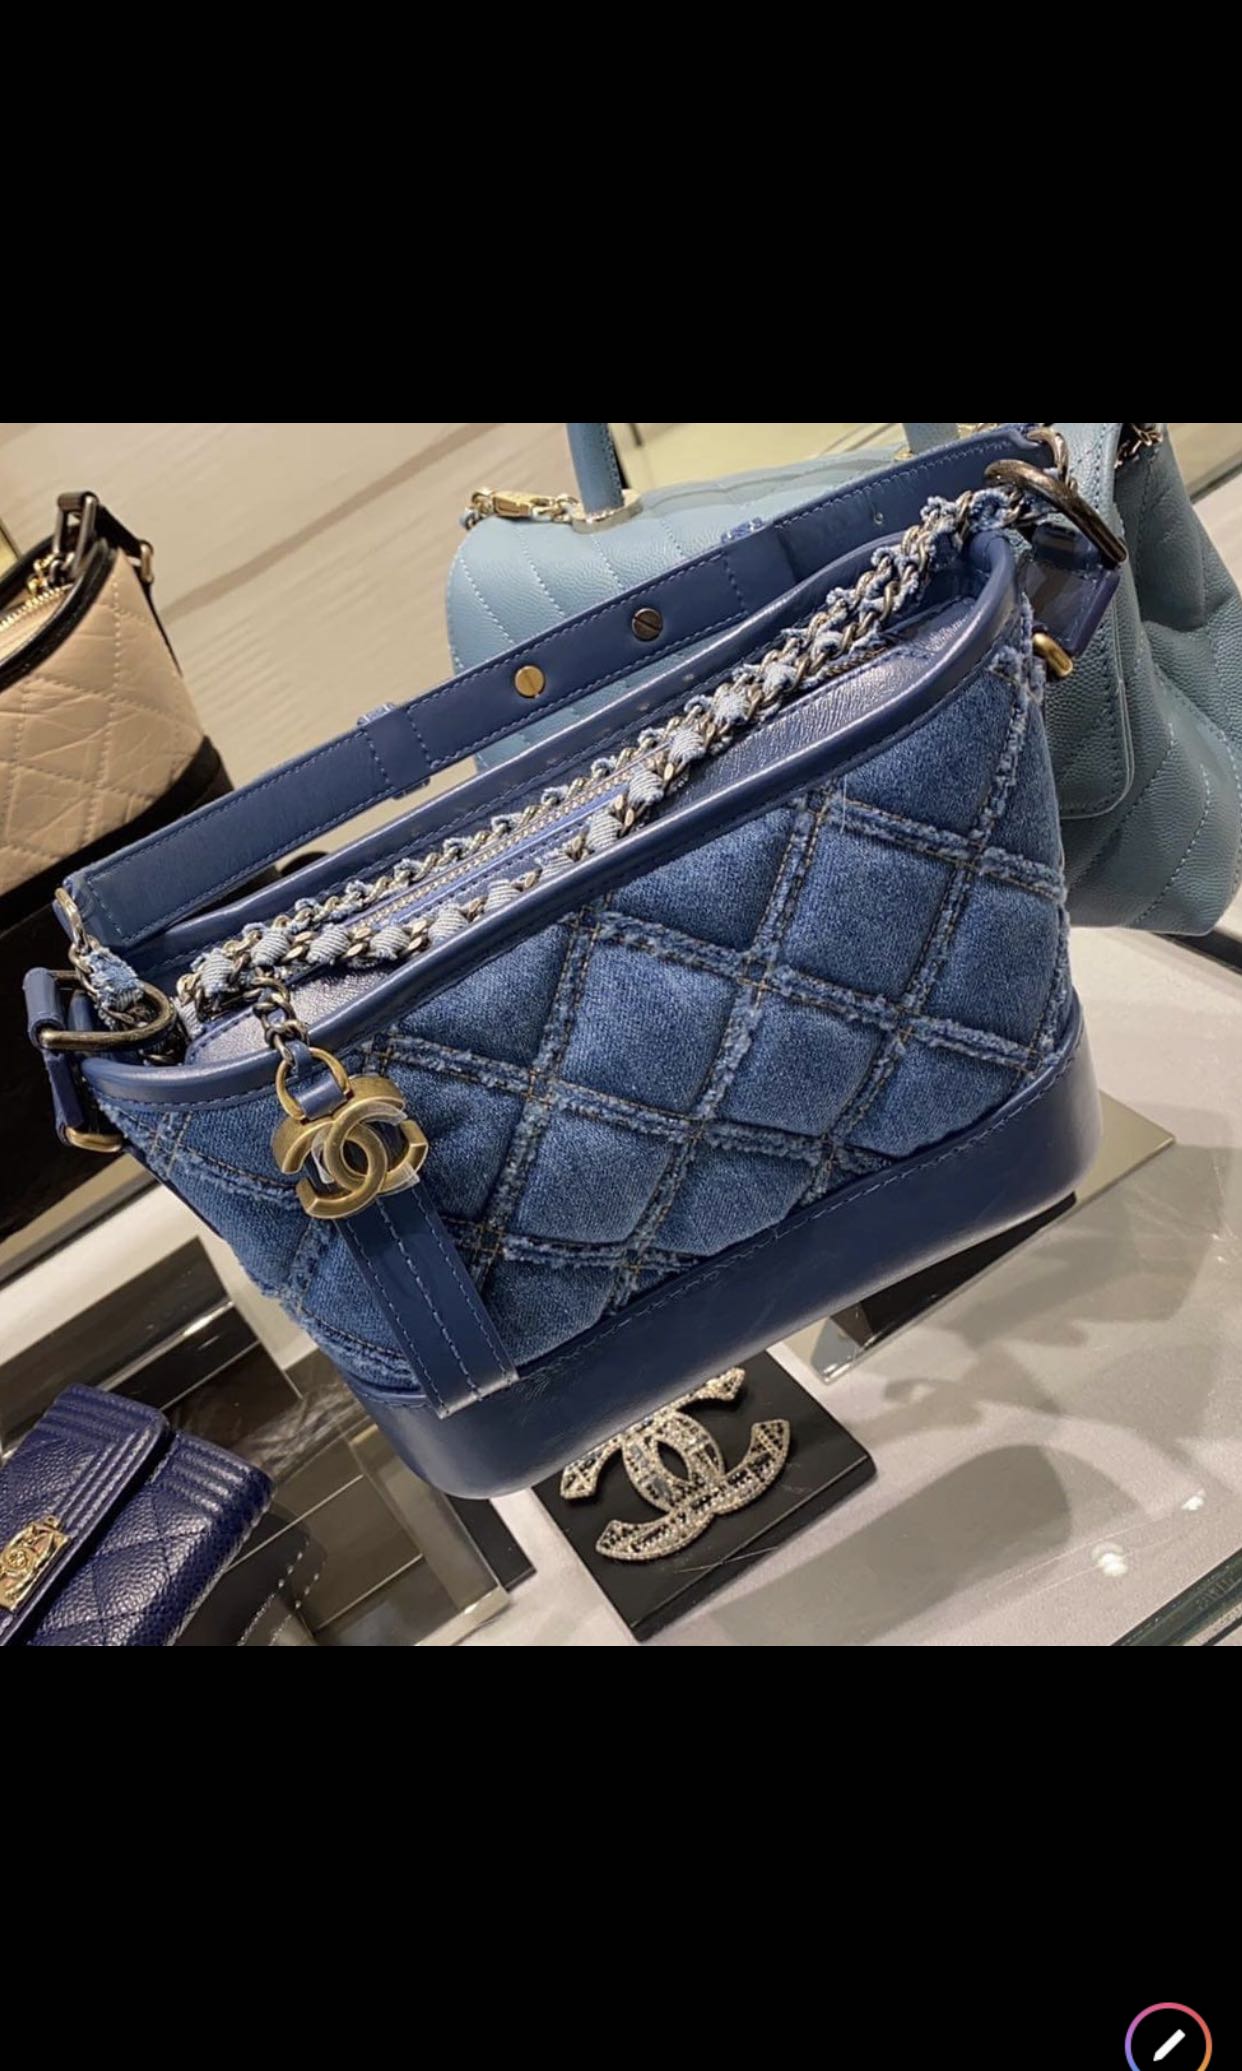 Chanel Small Gabrielle Hobo Bag in Dark Blue Denim with Novelty